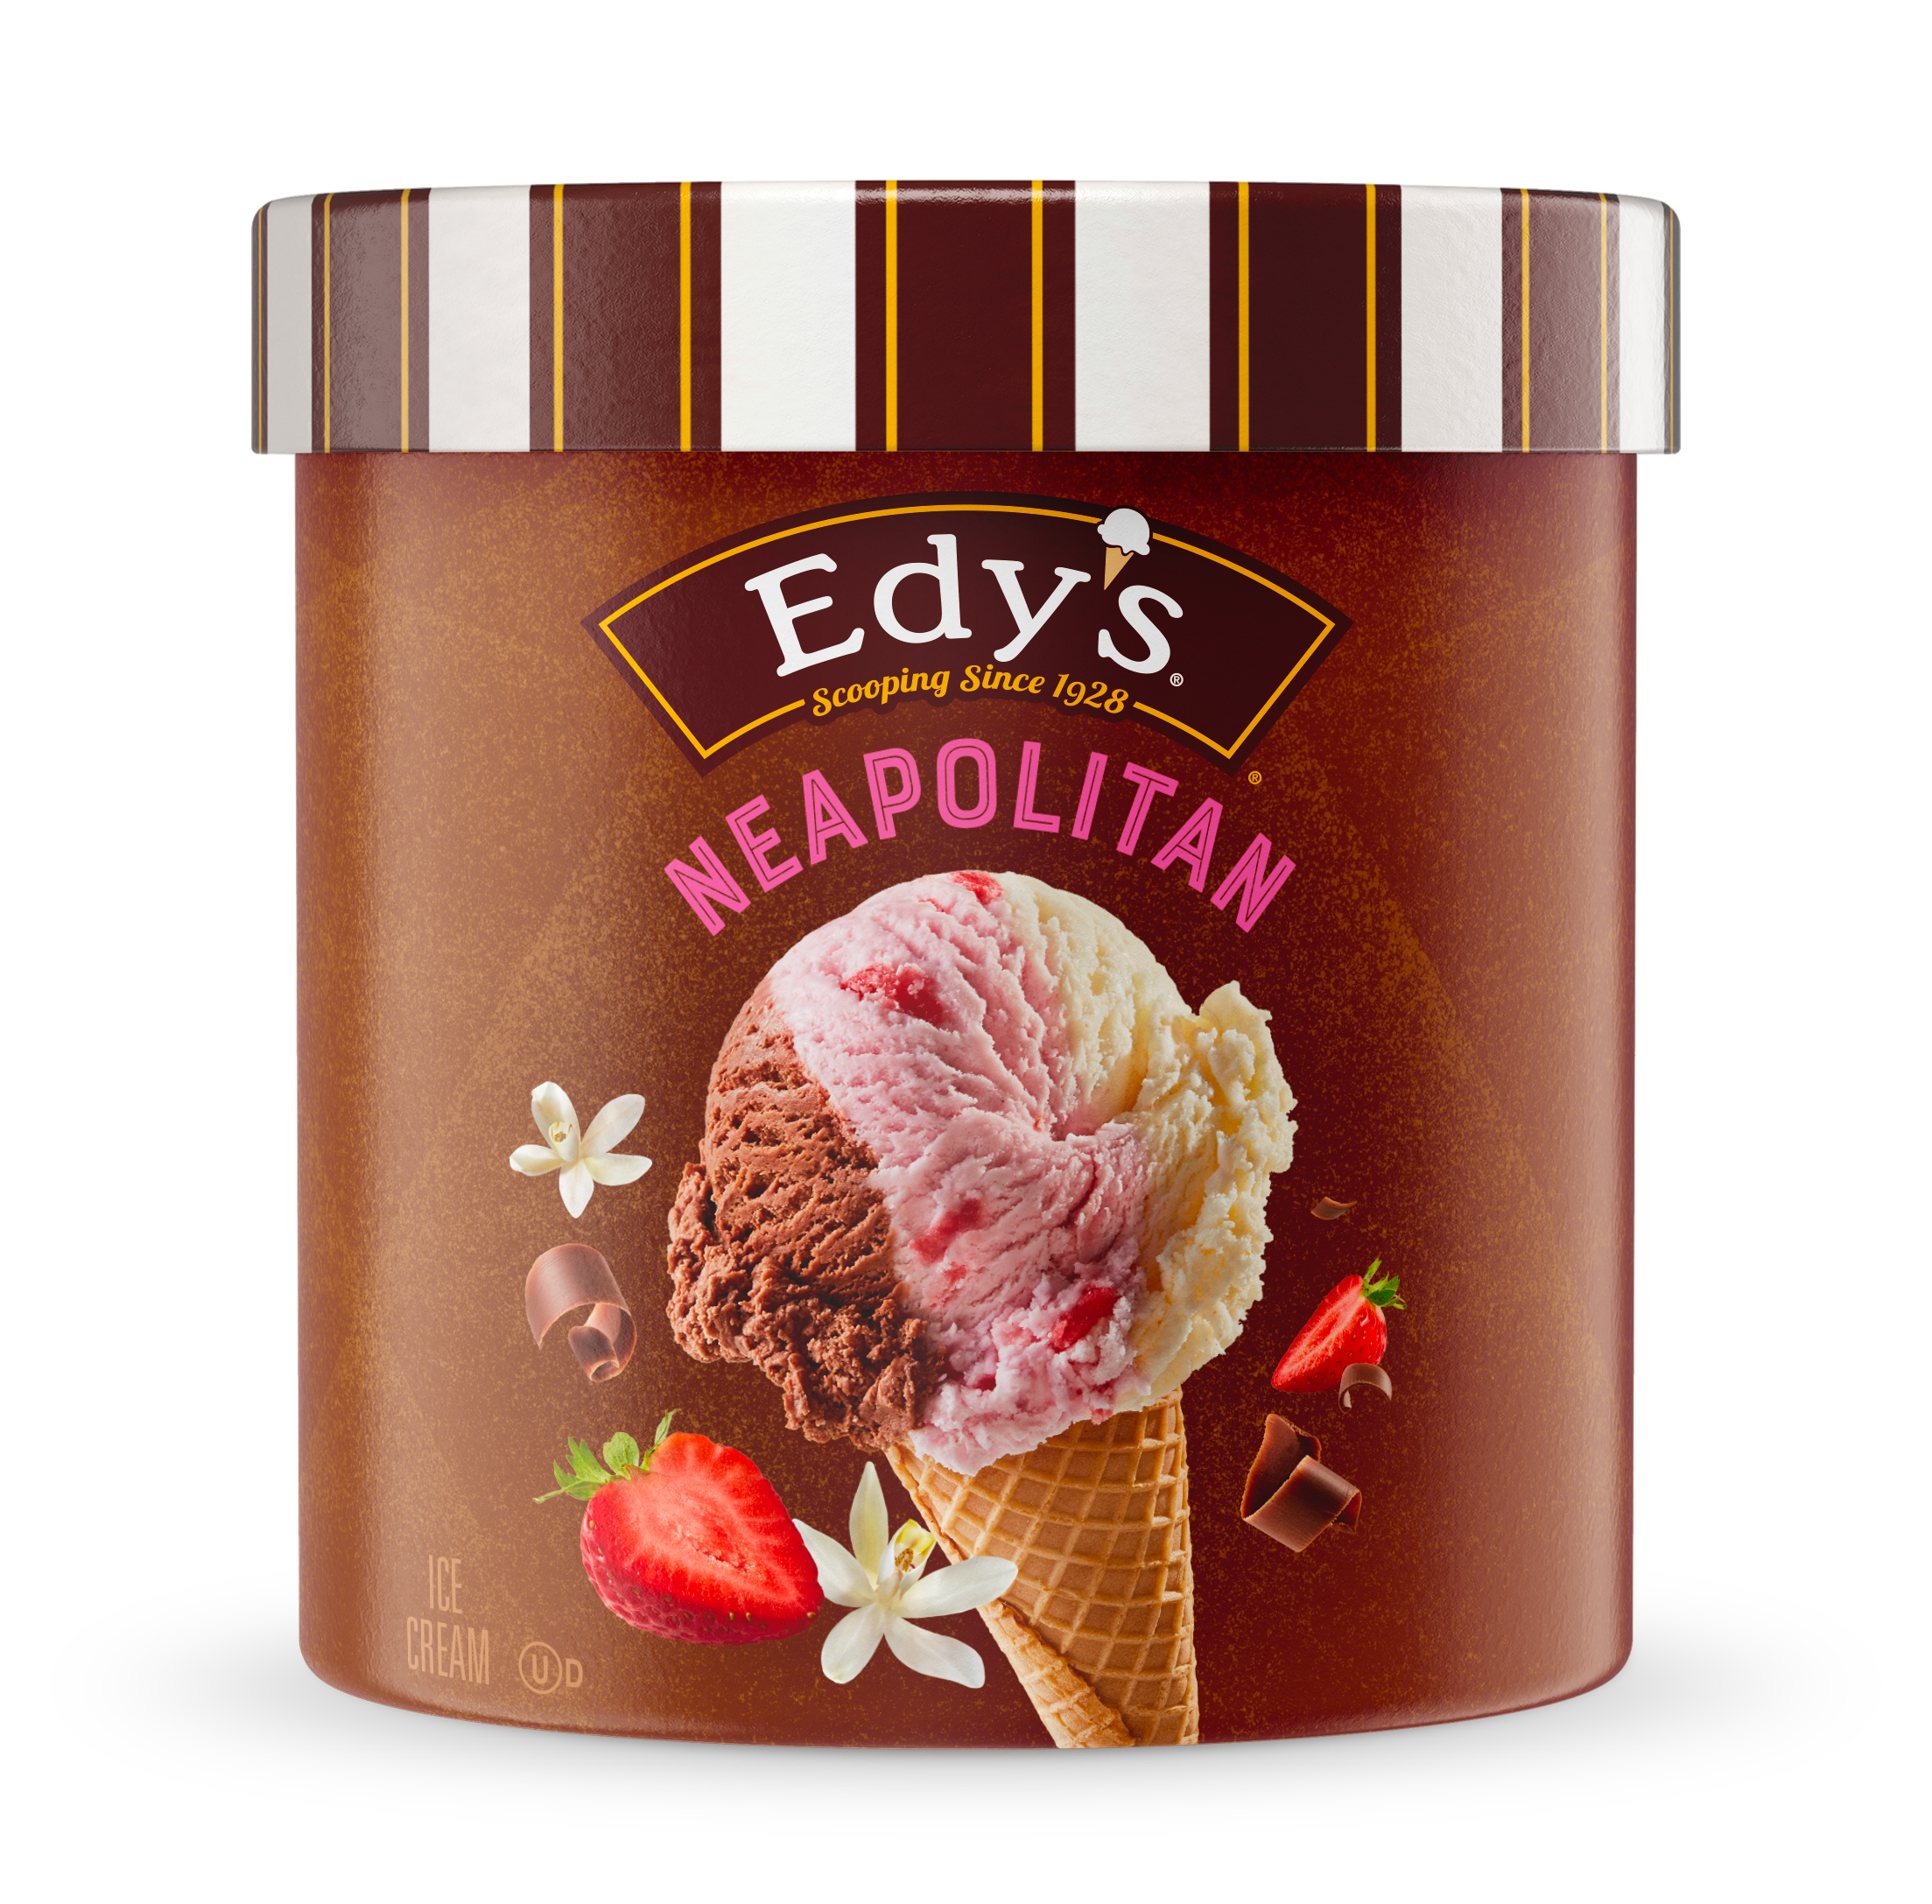 Carton of Edy's Neapolitan ice cream